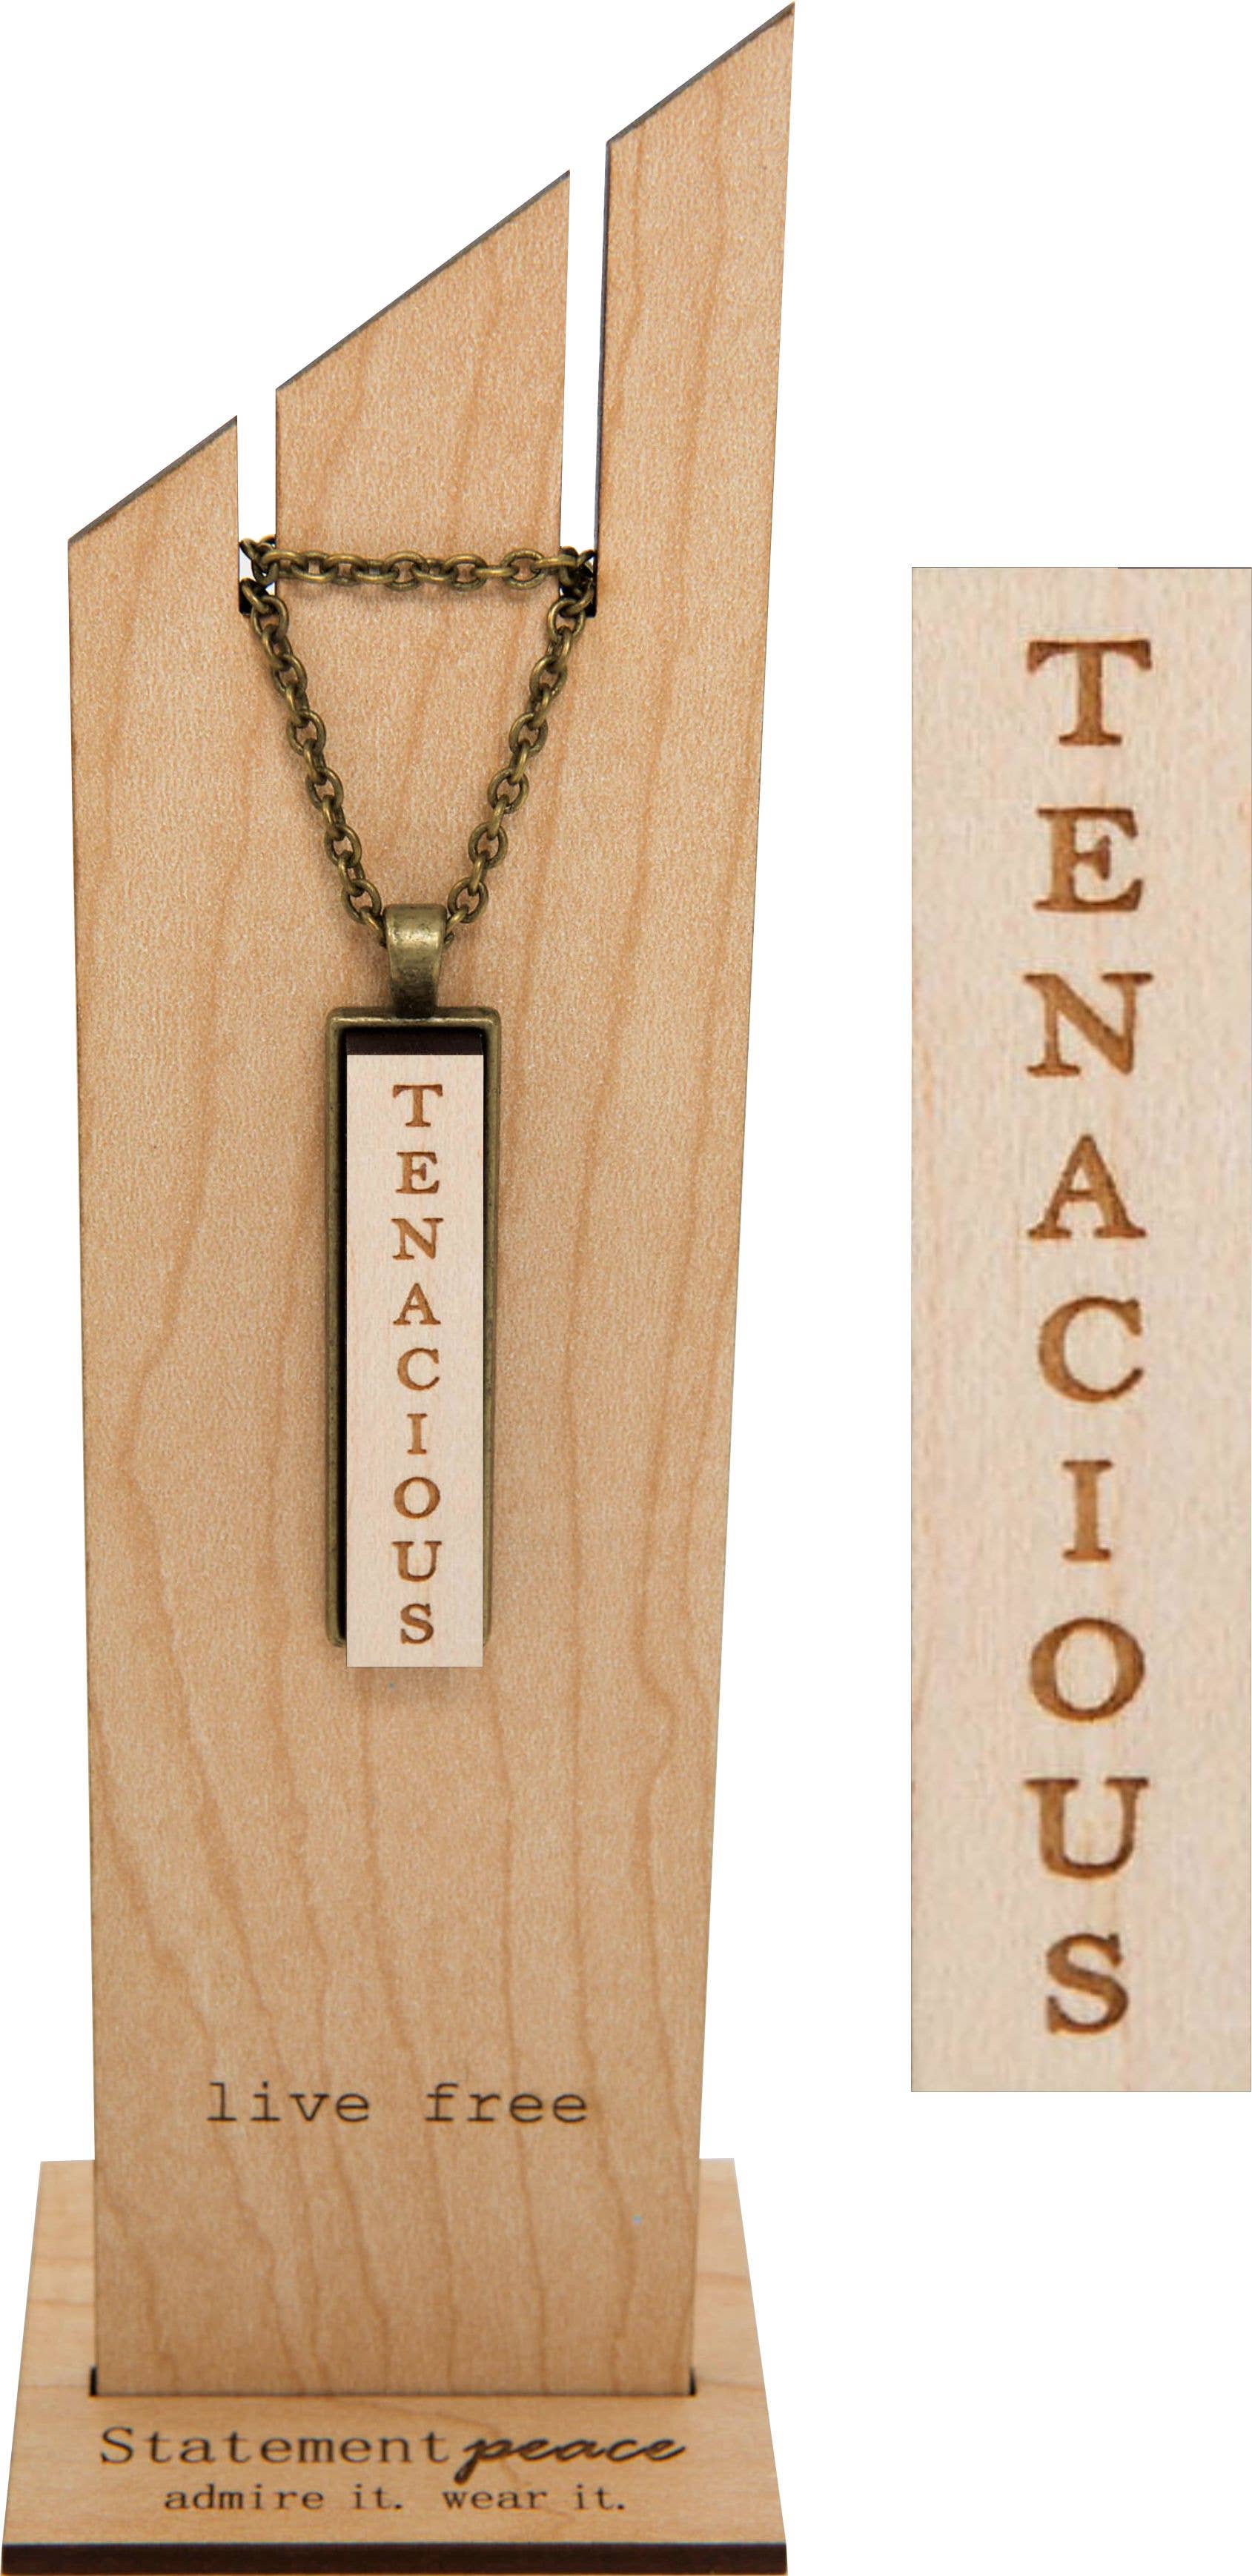 Tenacious Necklace